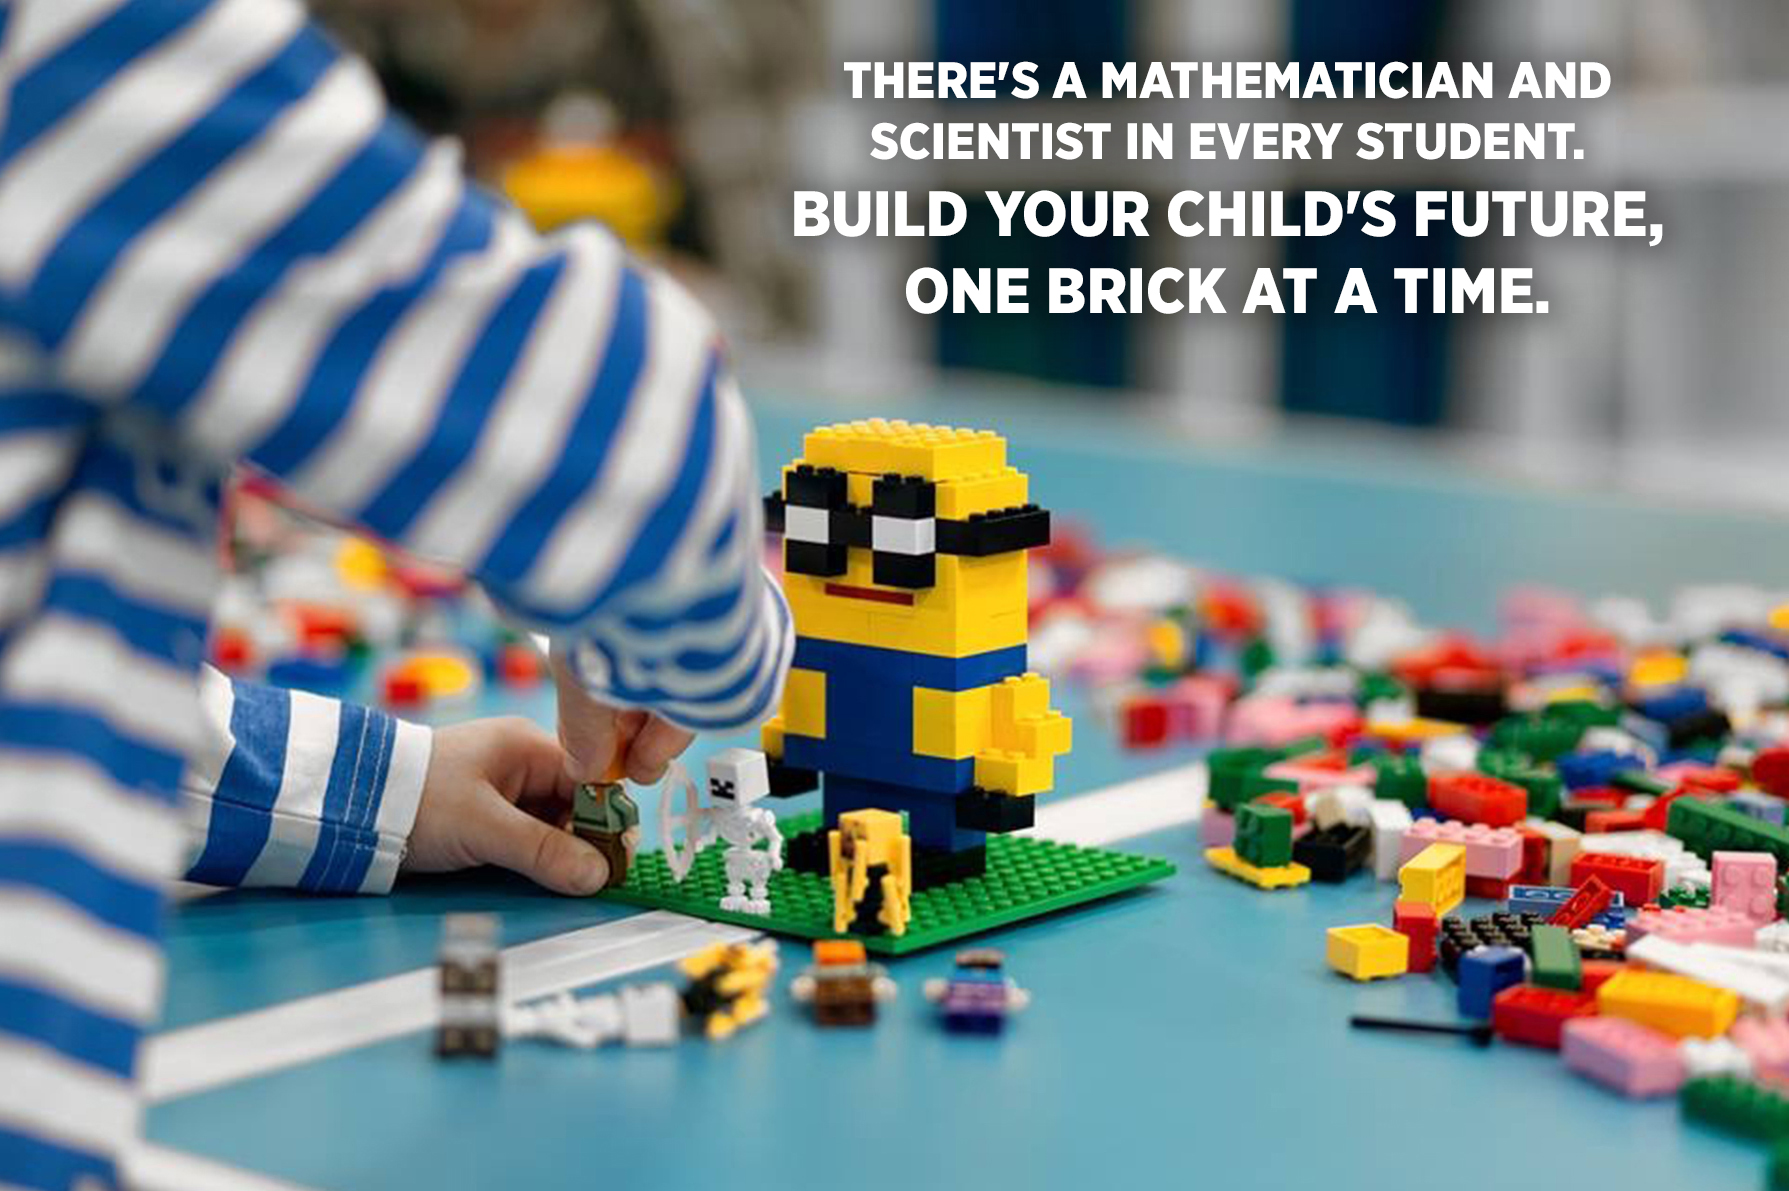 Bricks 4 Kidz Kids Franchise We Learn We Build We Play With Lego Bricks